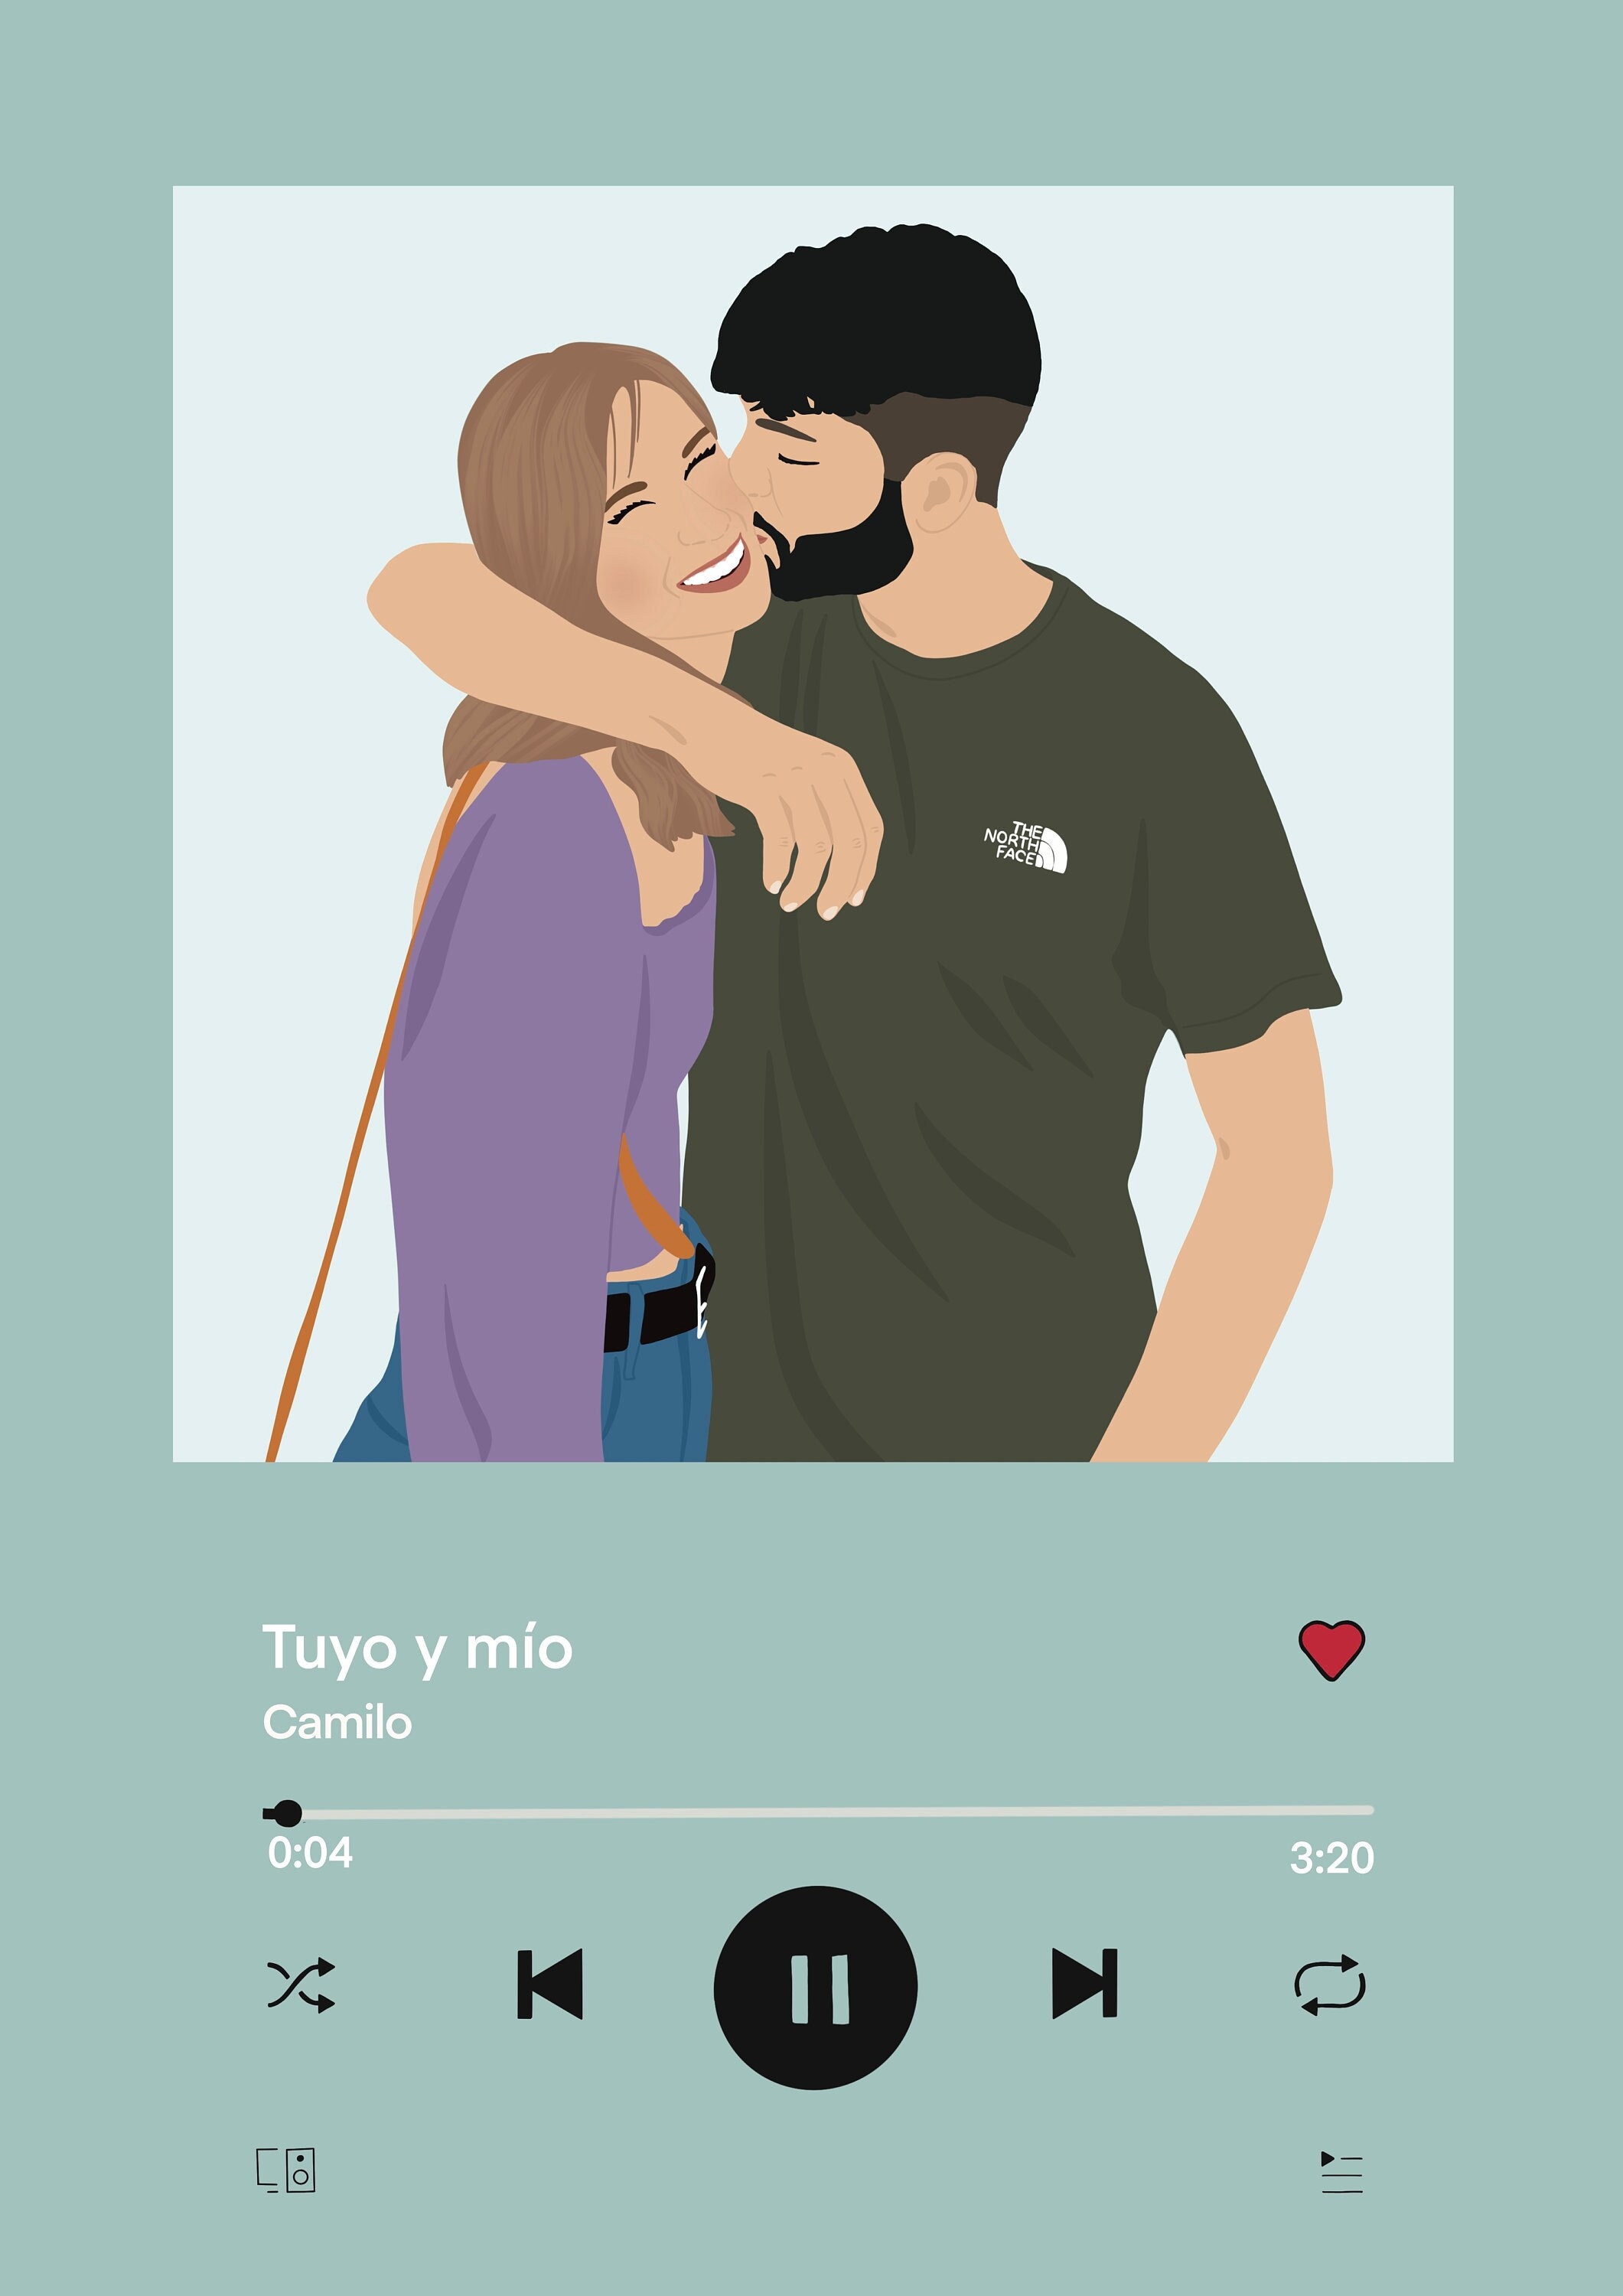 Custom Spotify Album Cover/personalised Portrait/couple Digital